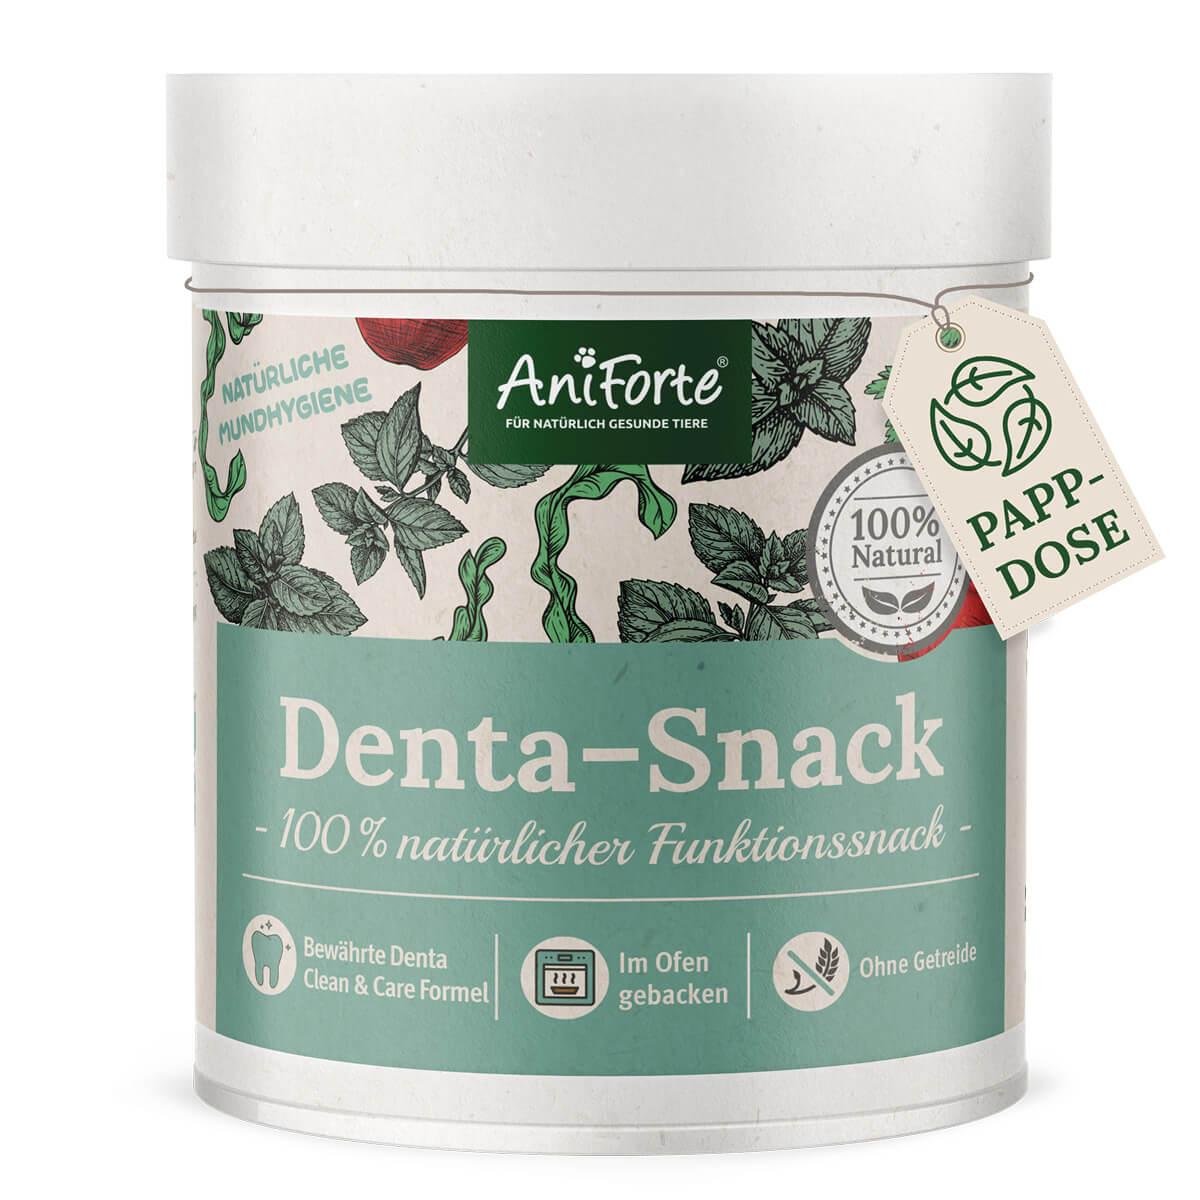 Aniforte Denta-Snack 300 g